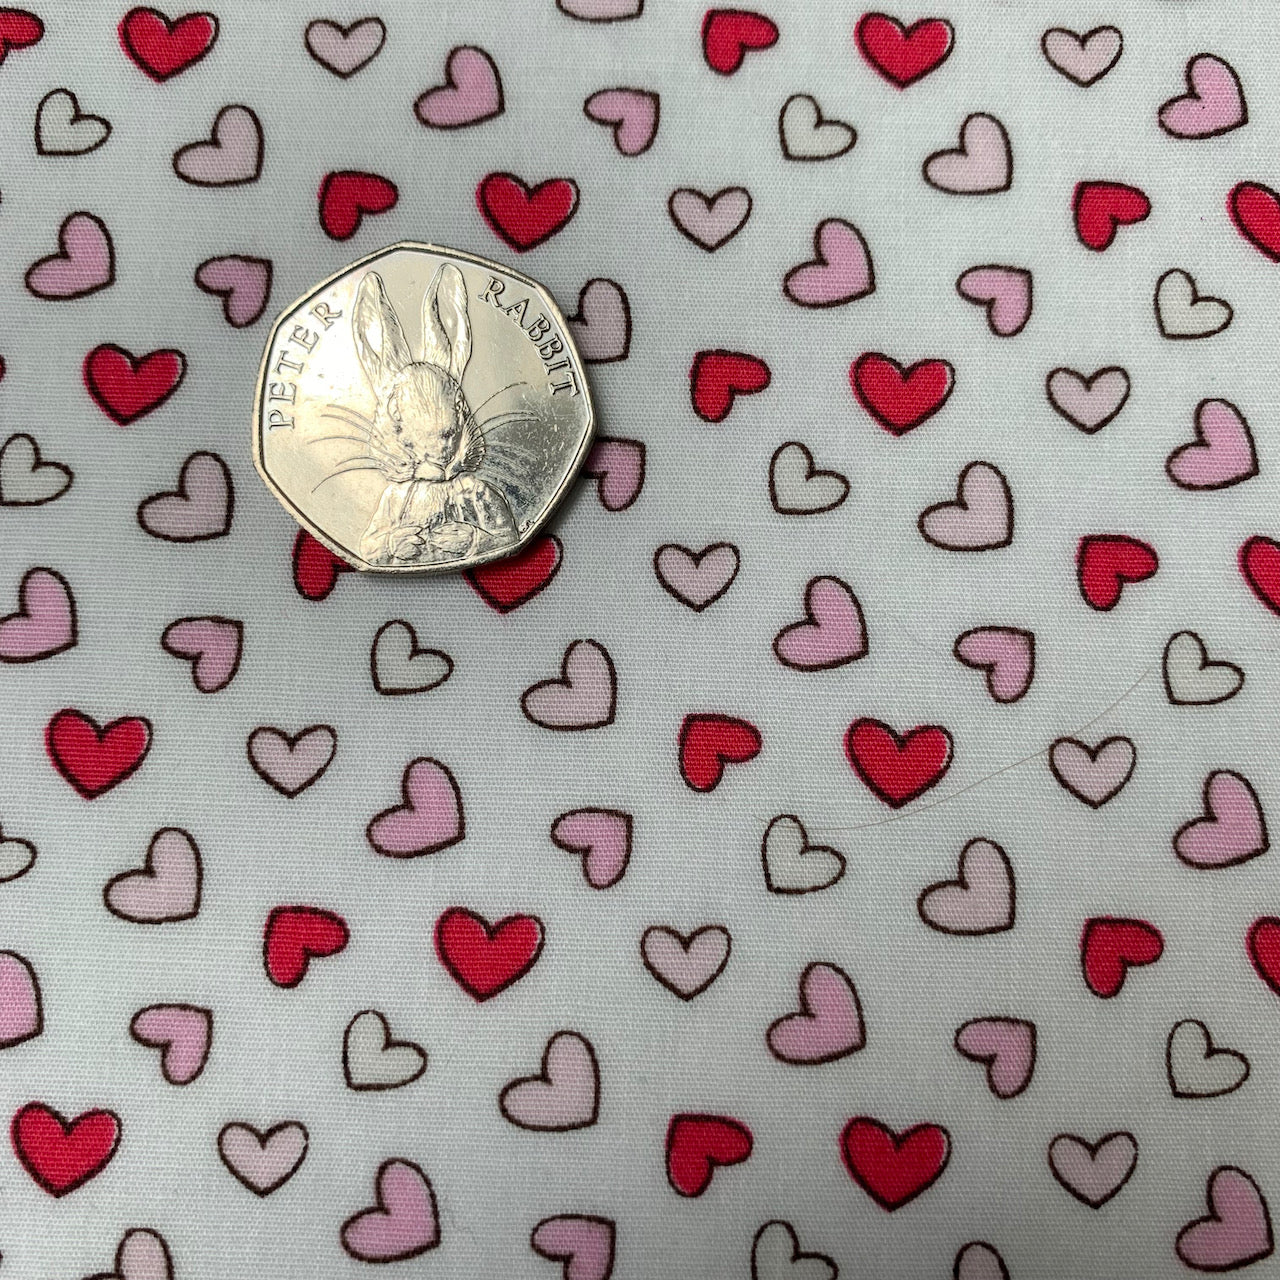 Fabric Felt Sheet - Hearts in Pinks